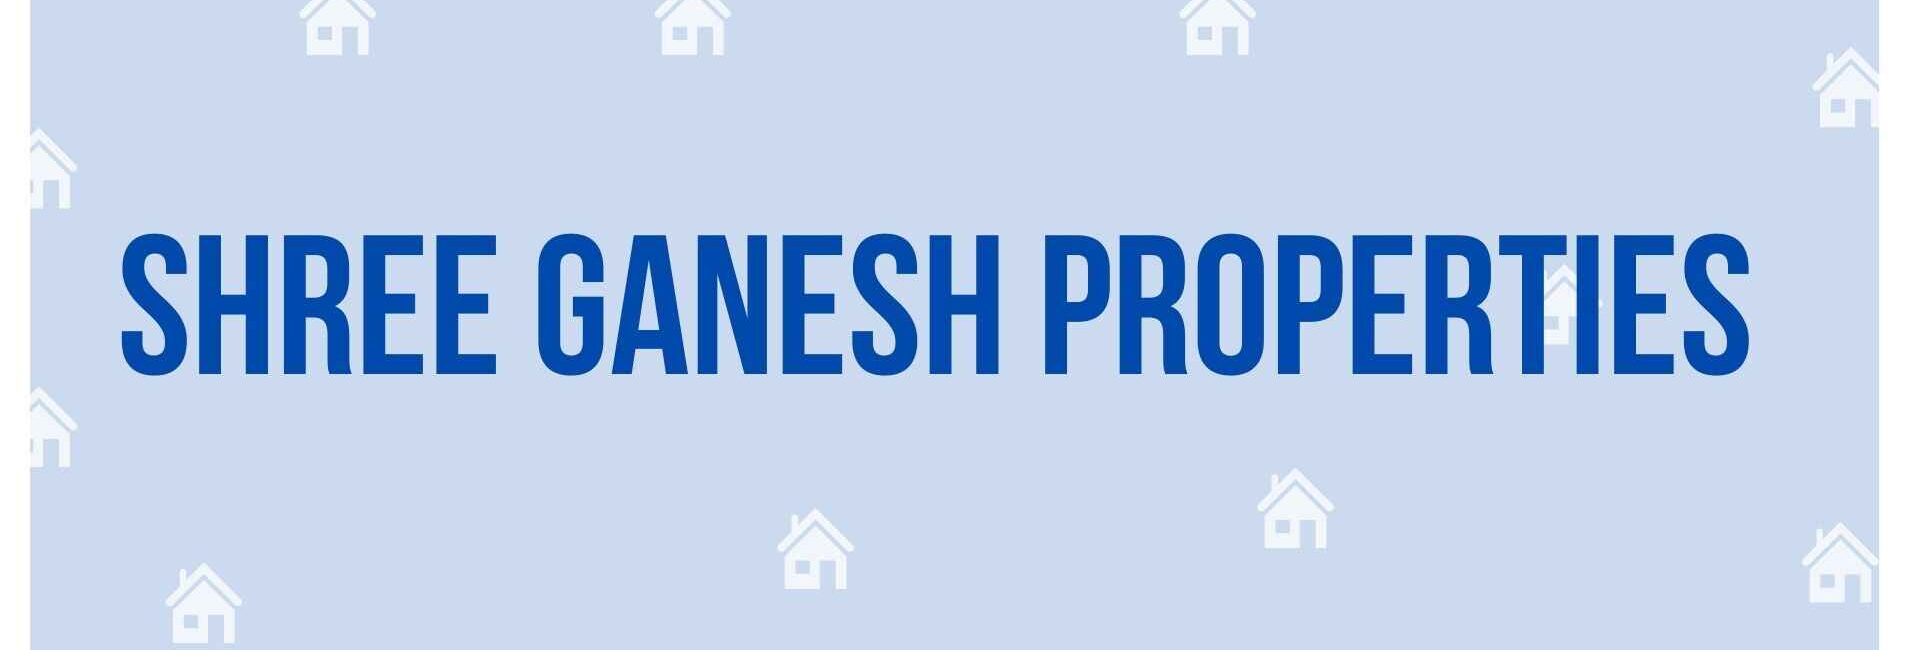 Shree Ganesh Properties - Property Dealer in Noida